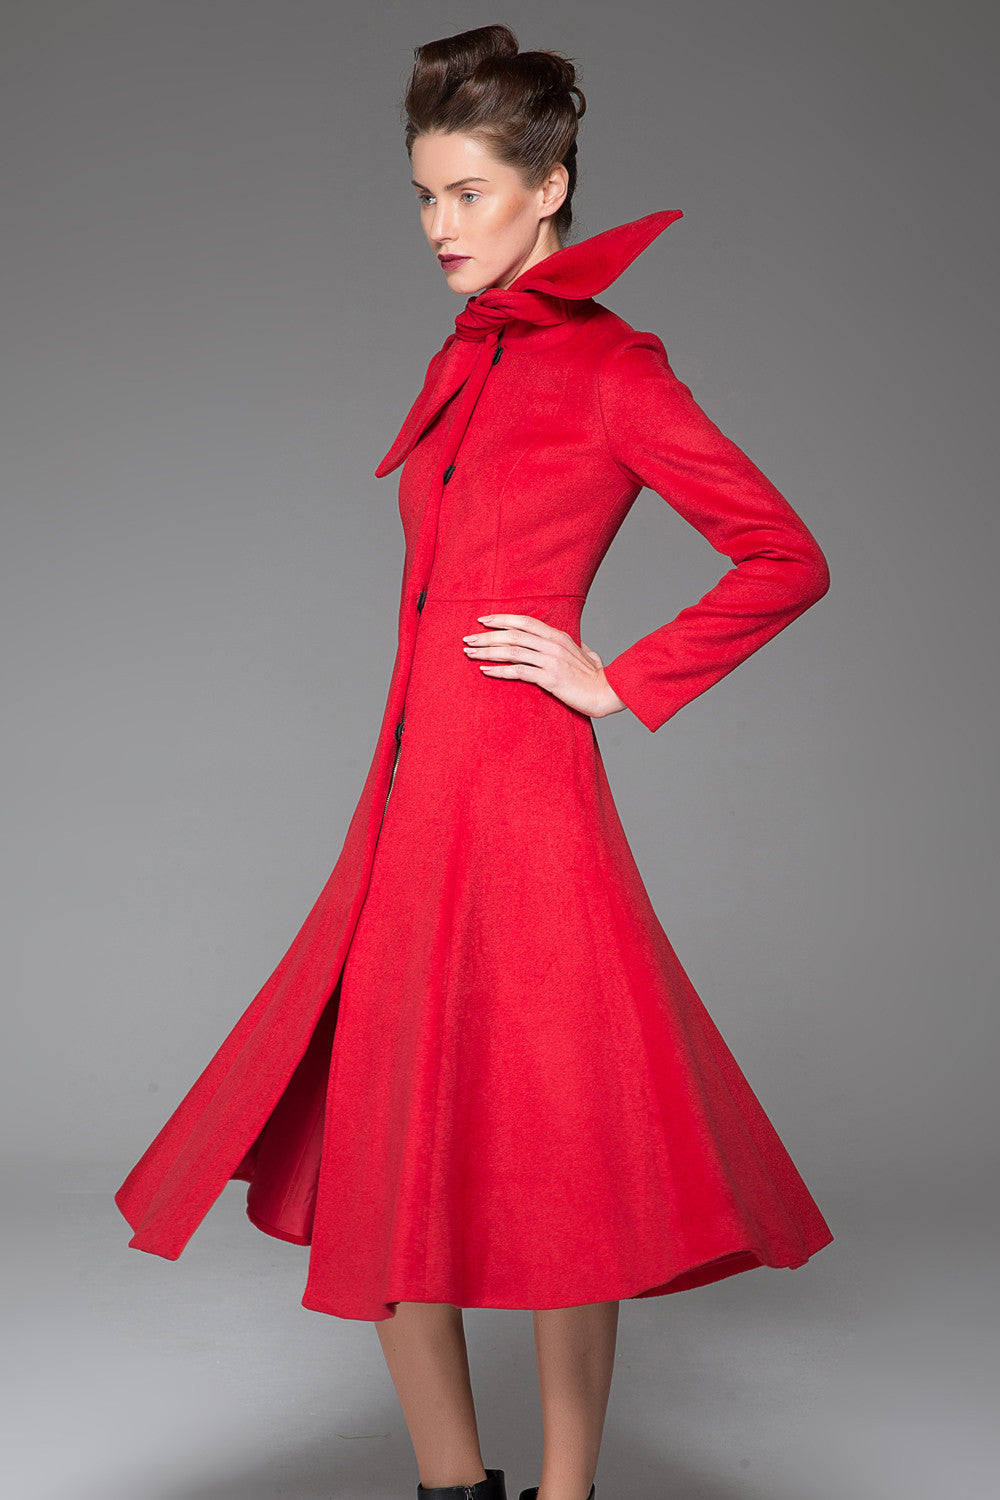 Wine red wool coat winter women coat hooded coat (1354) – XiaoLizi